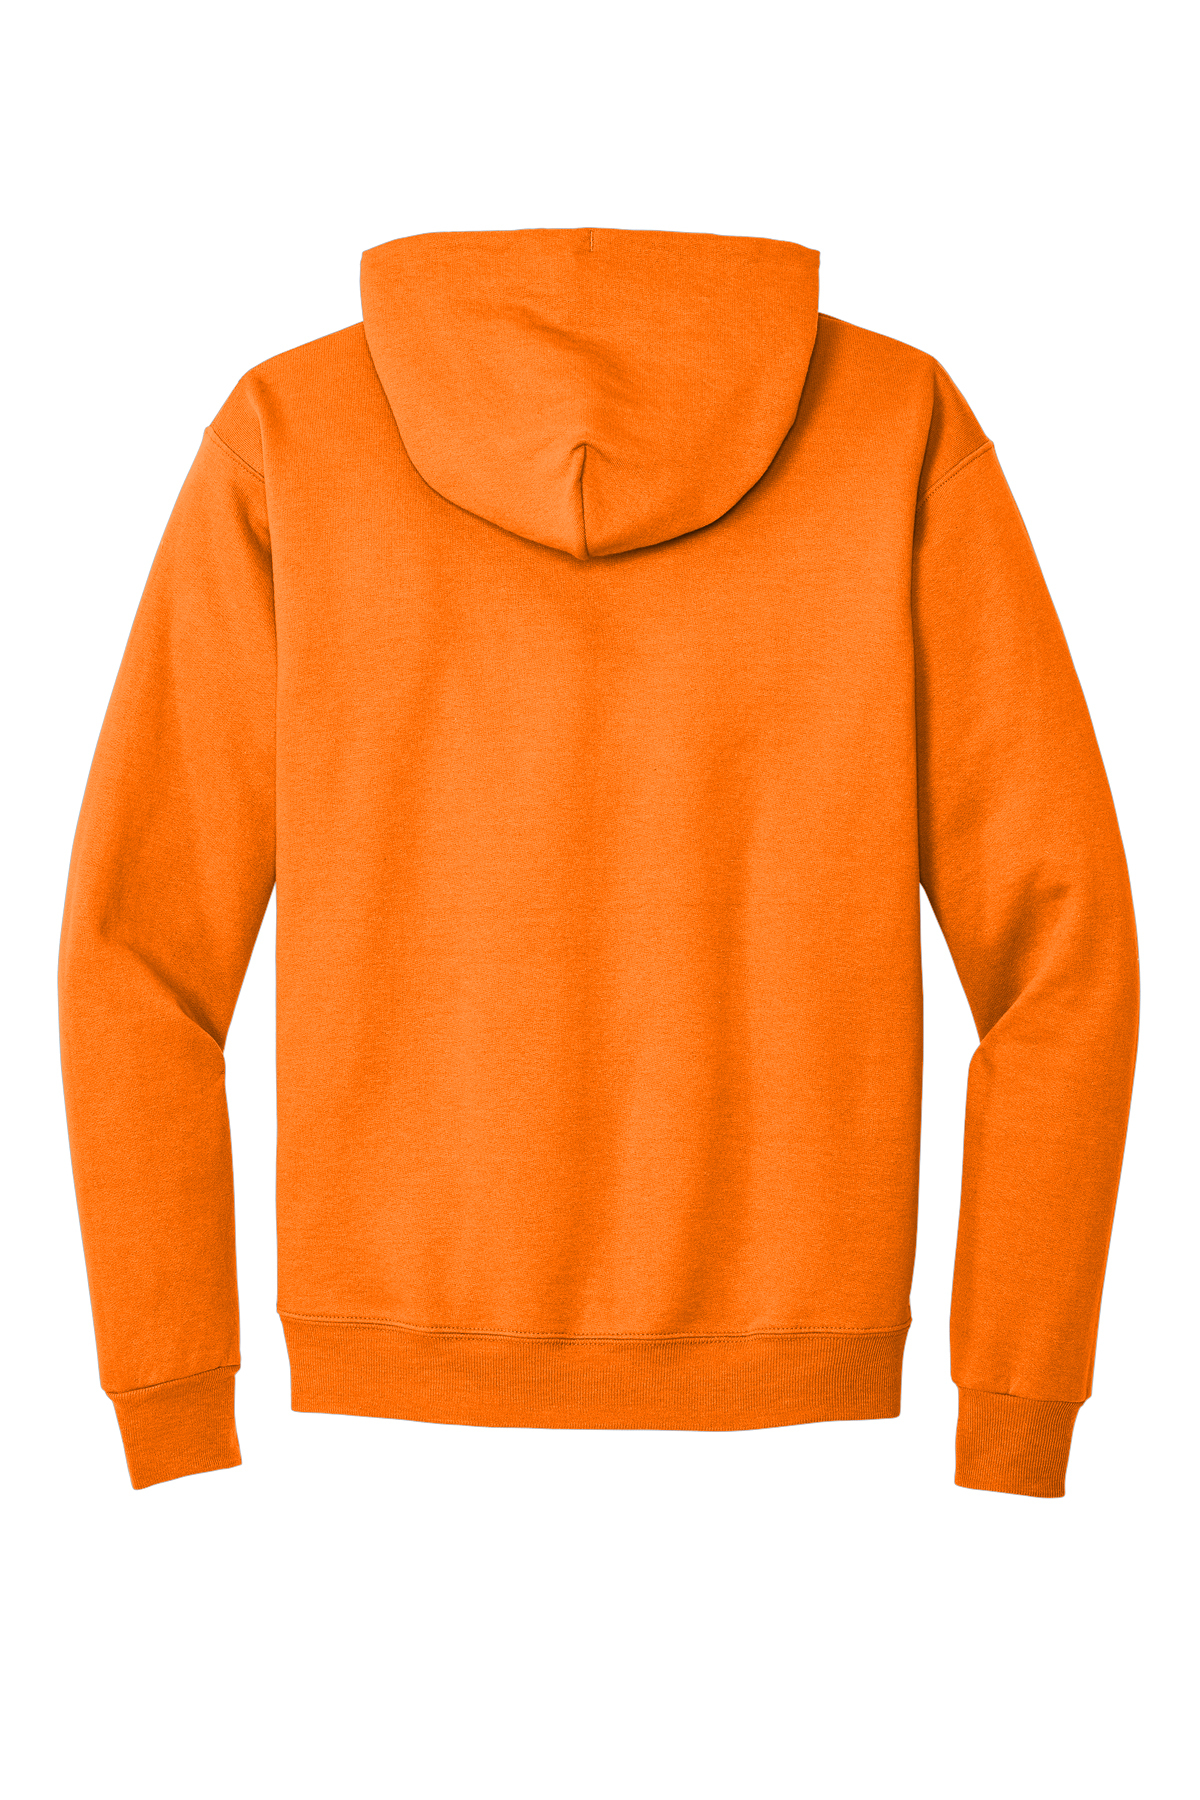 Hanes EcoSmart - Pullover Hooded Sweatshirt | Product | SanMar